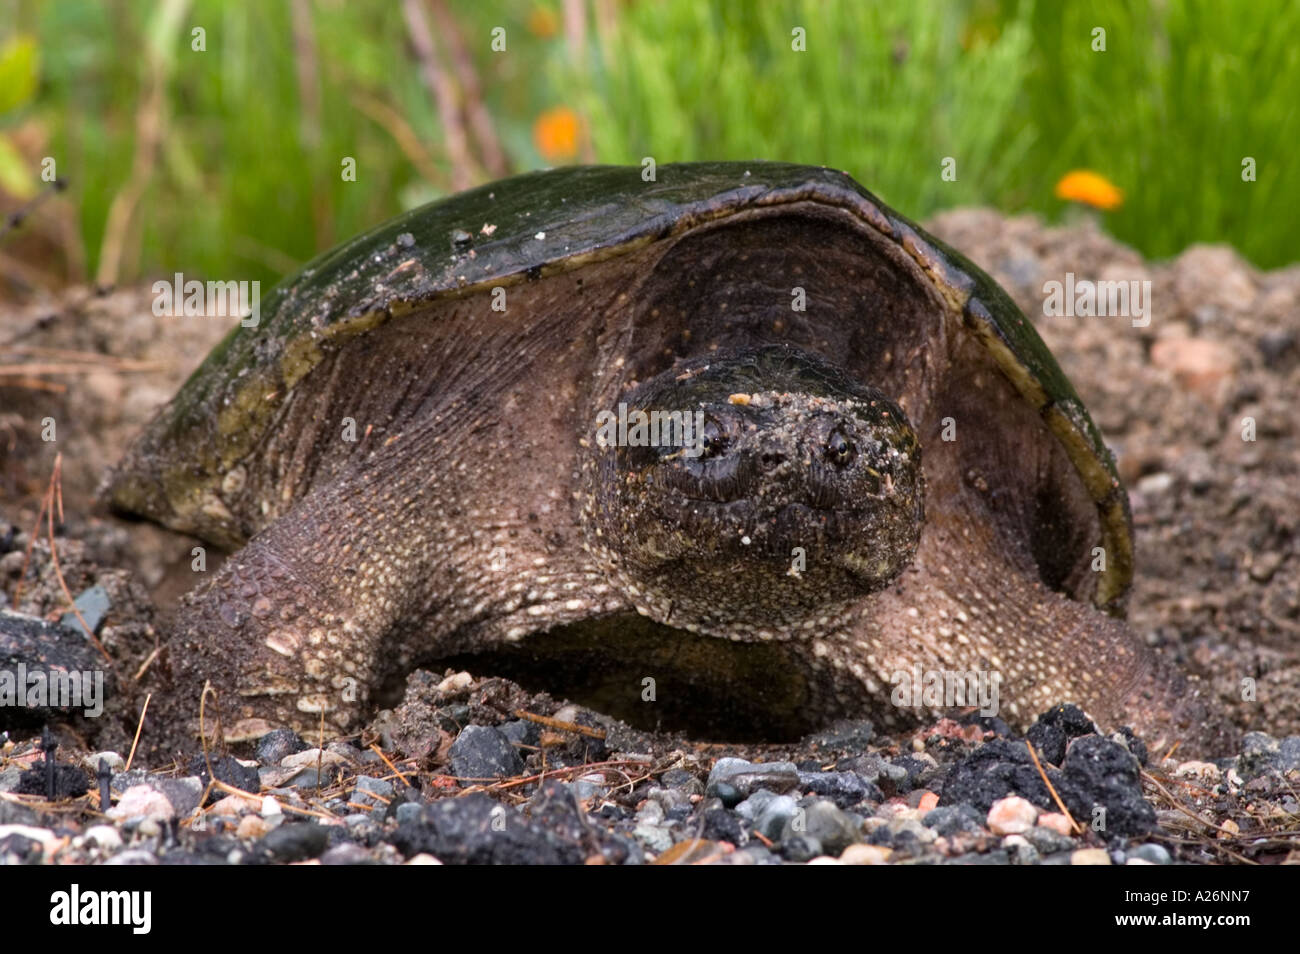 Snapping turtle (Chelydra serpentina) Female in roadside gravel laying eggs. Killarney, Ontario, Canada Stock Photo